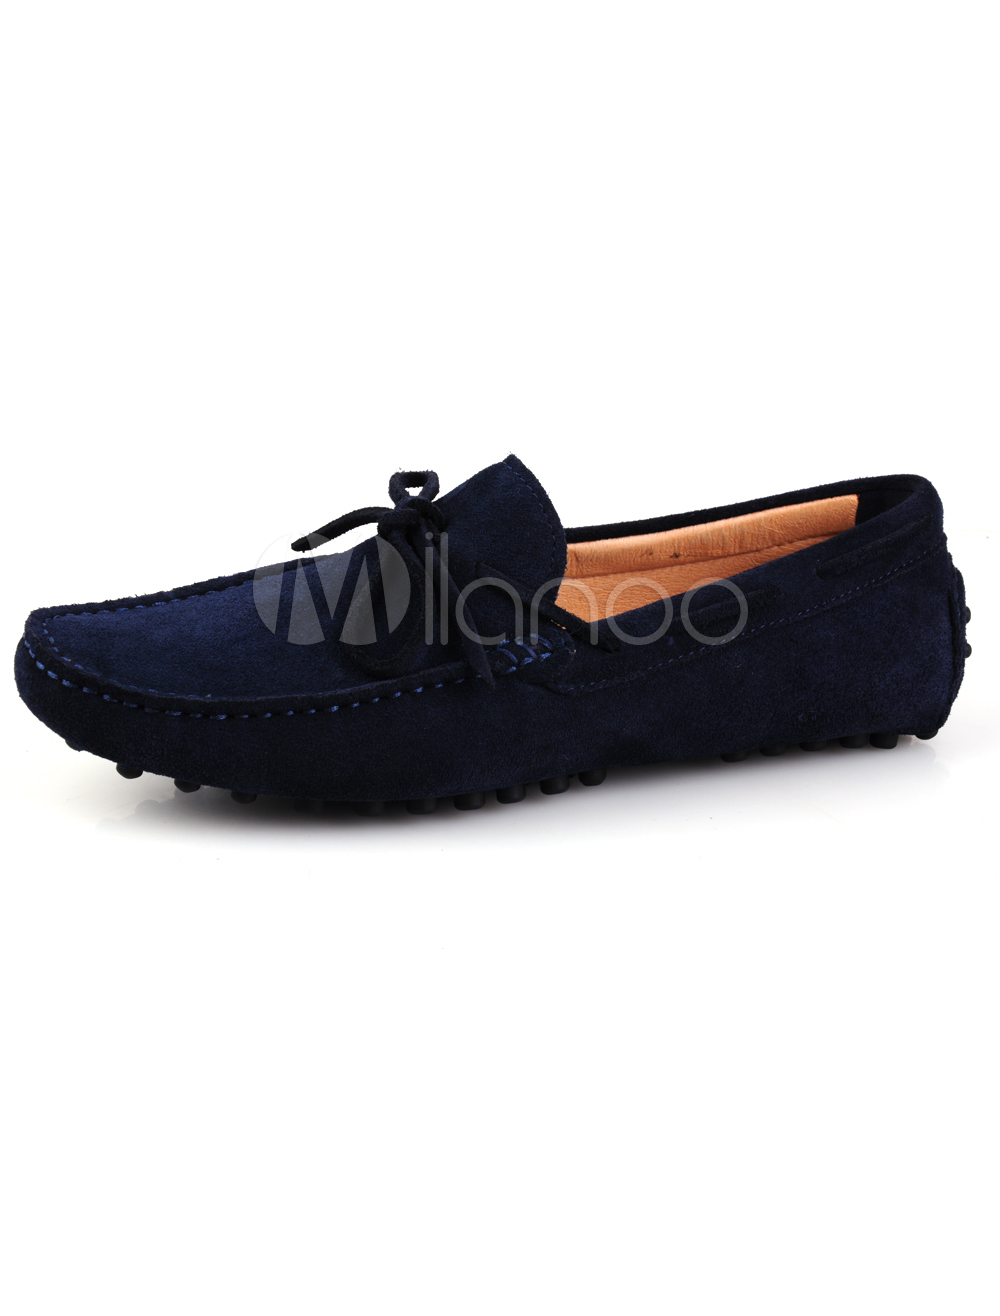 Deep Blue Chic Cowhide Loafers Chic Men's Shoes - Milanoo.com